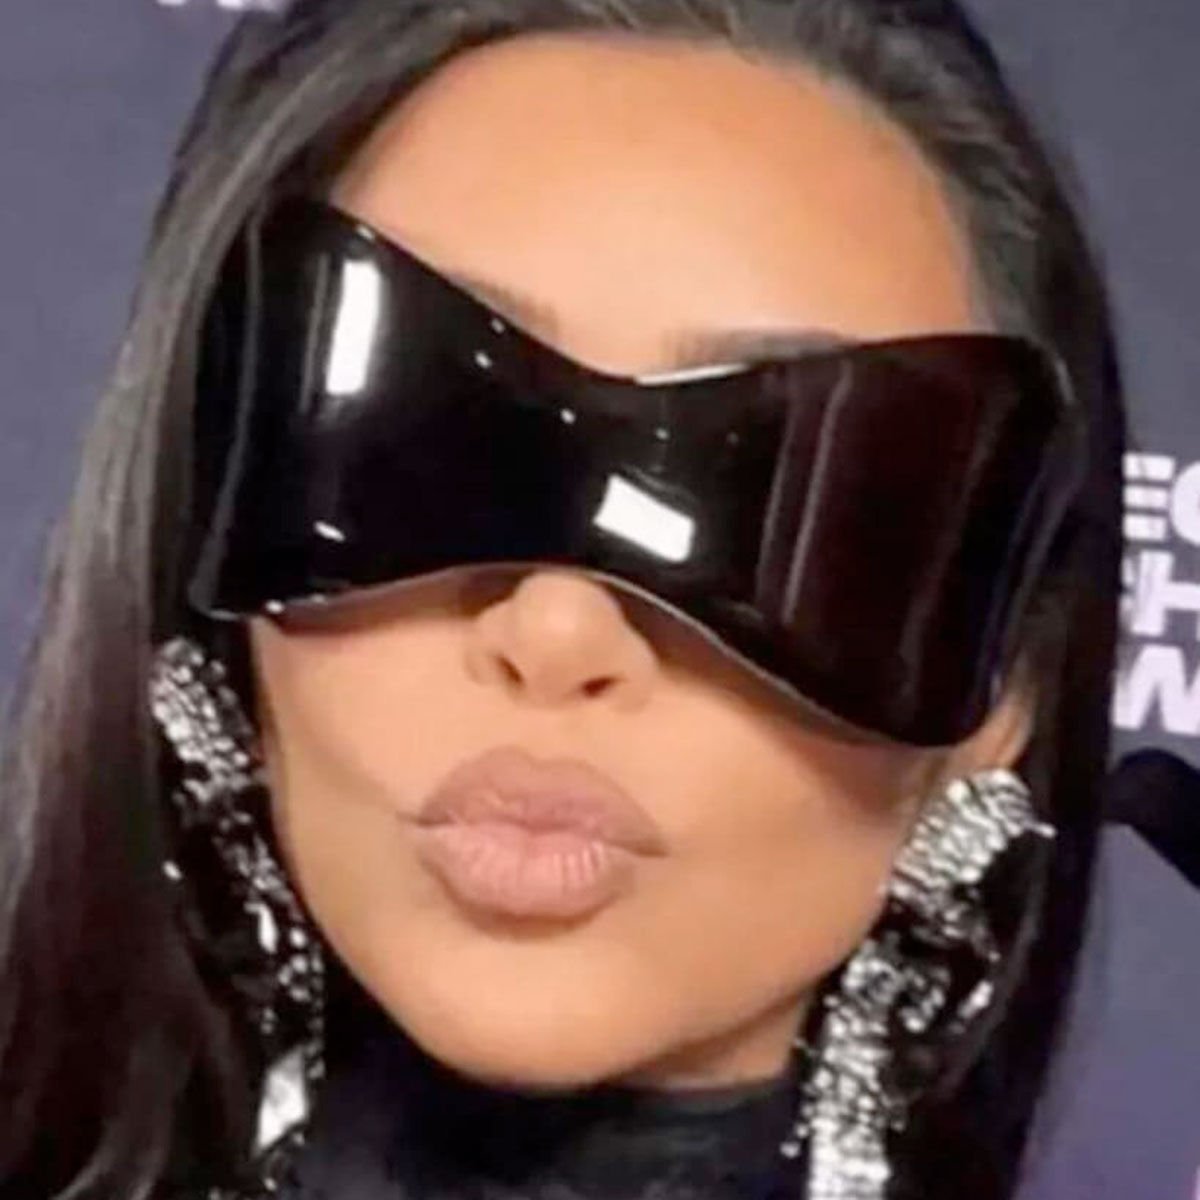 Sunglasses Mask Wrap Black Eyewear for Women - Bae Apparel